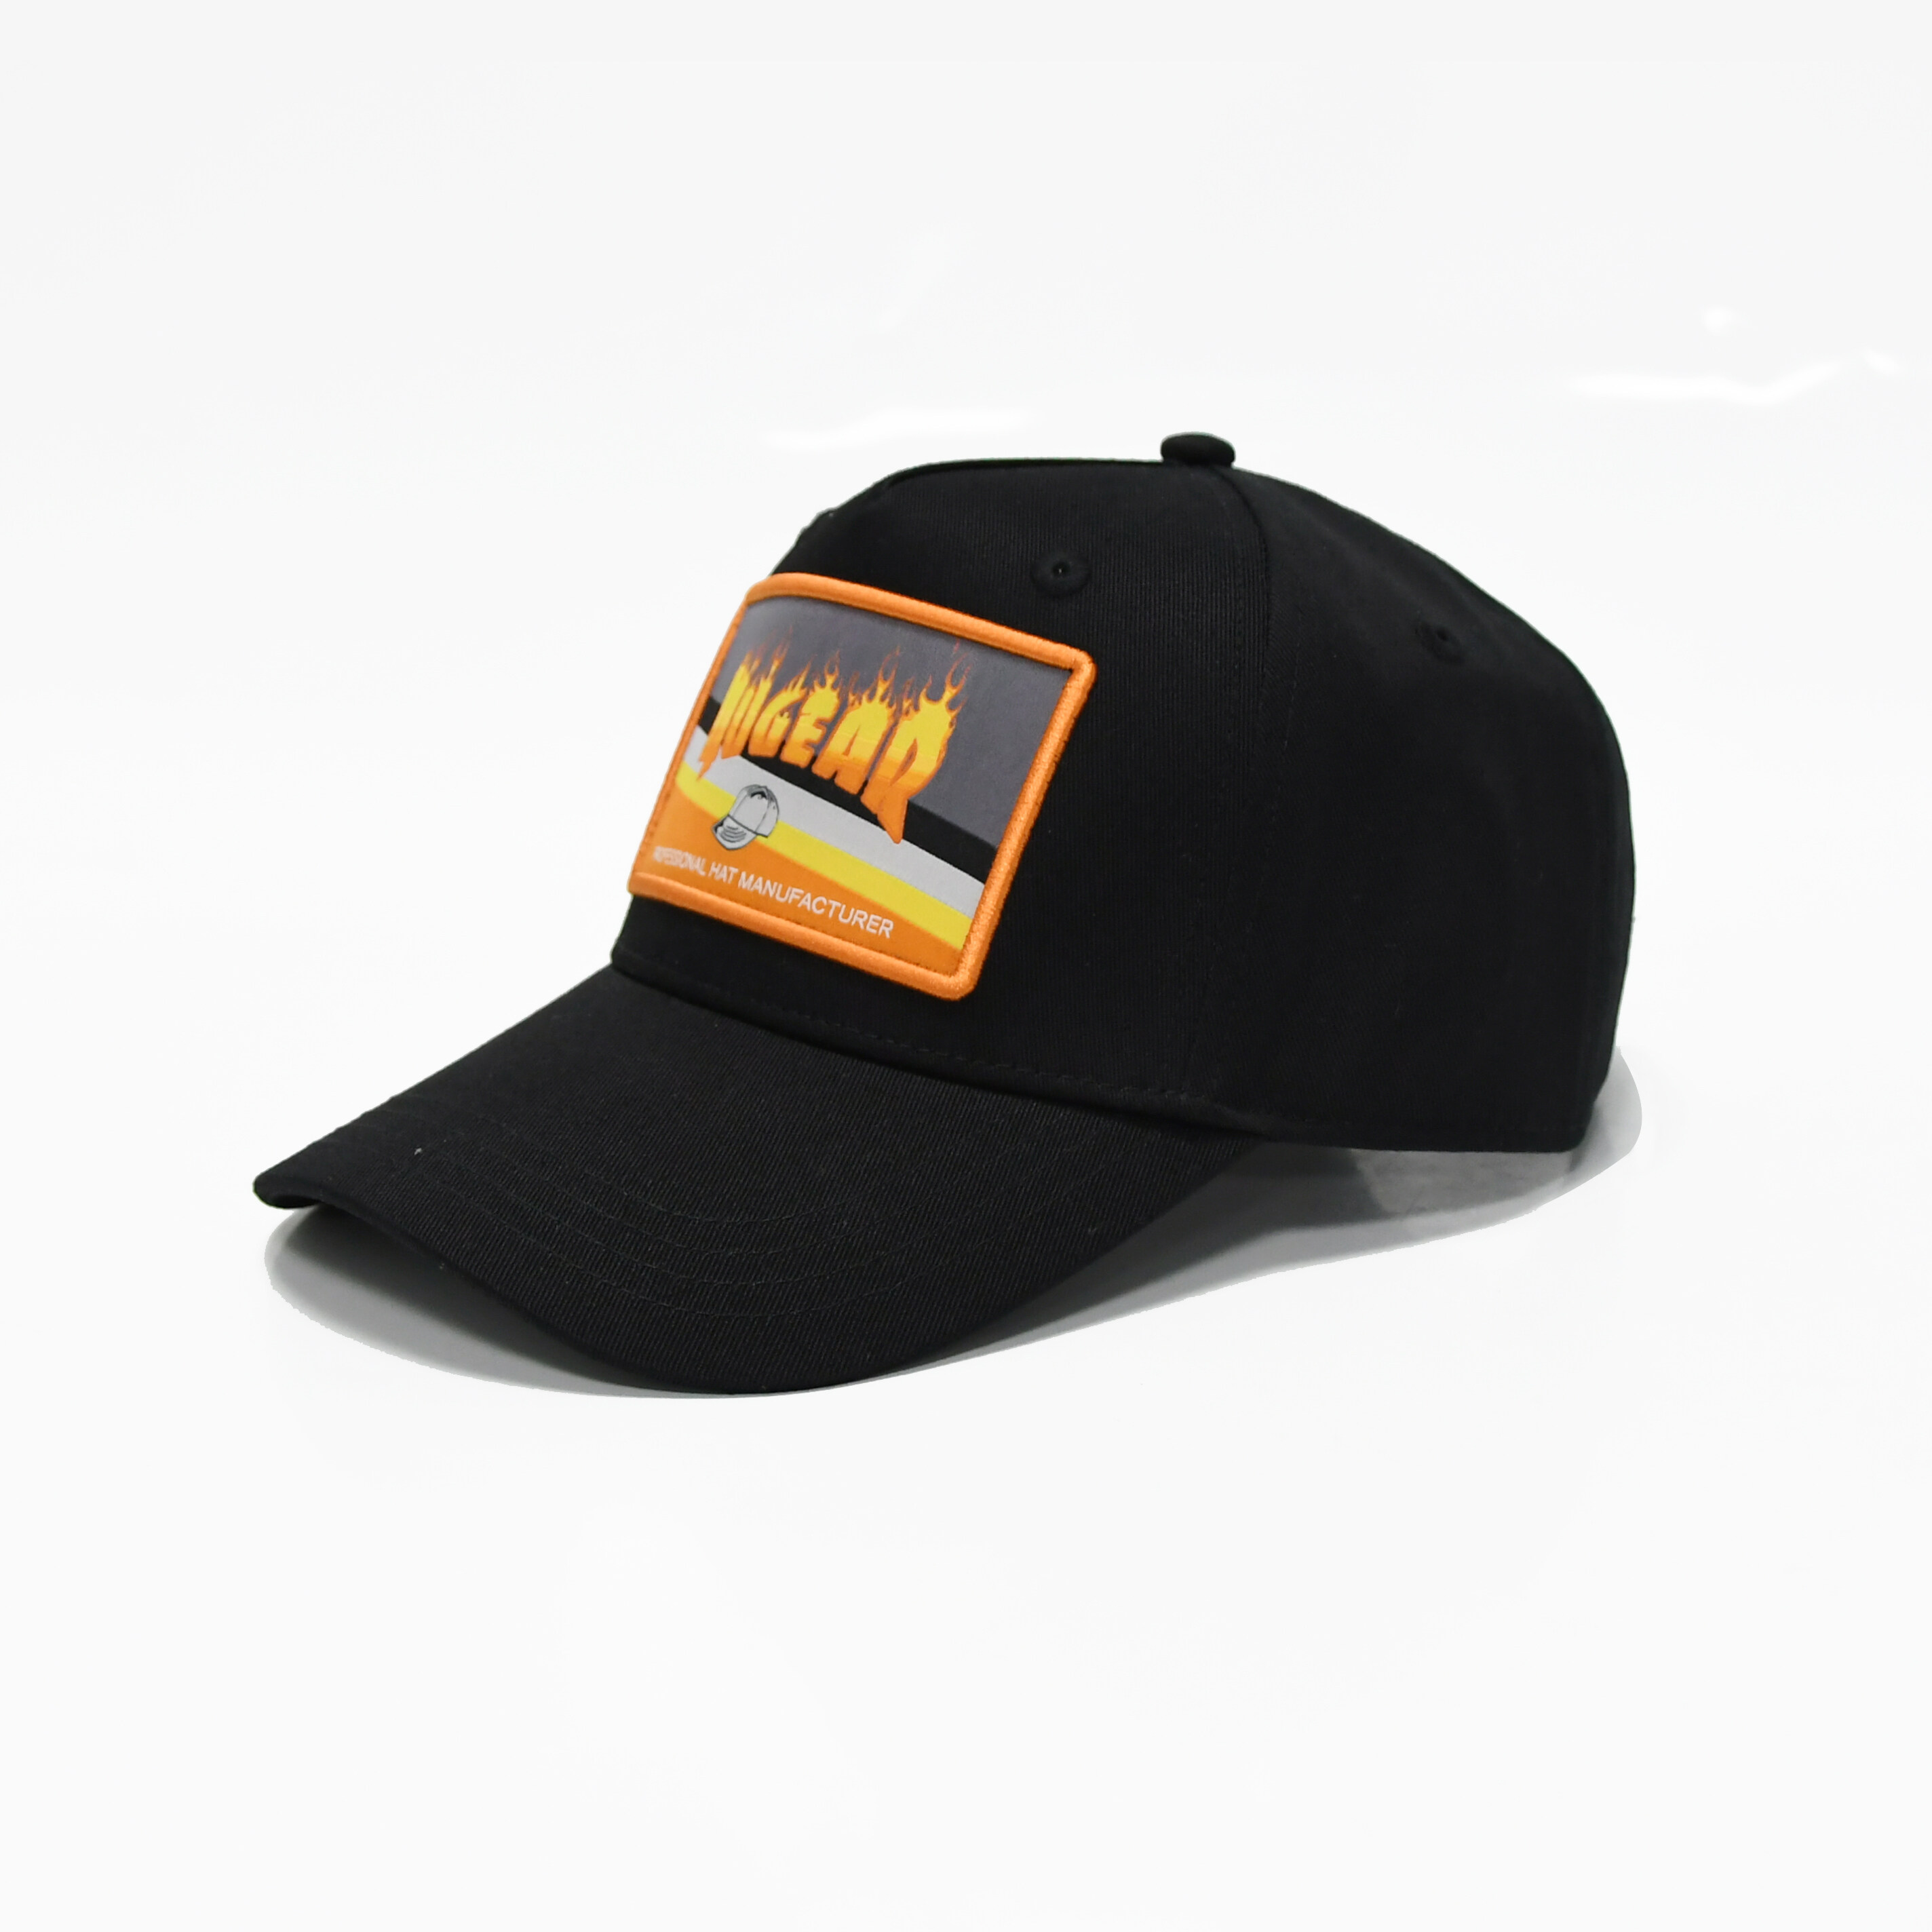 The best black five panel baseball cap